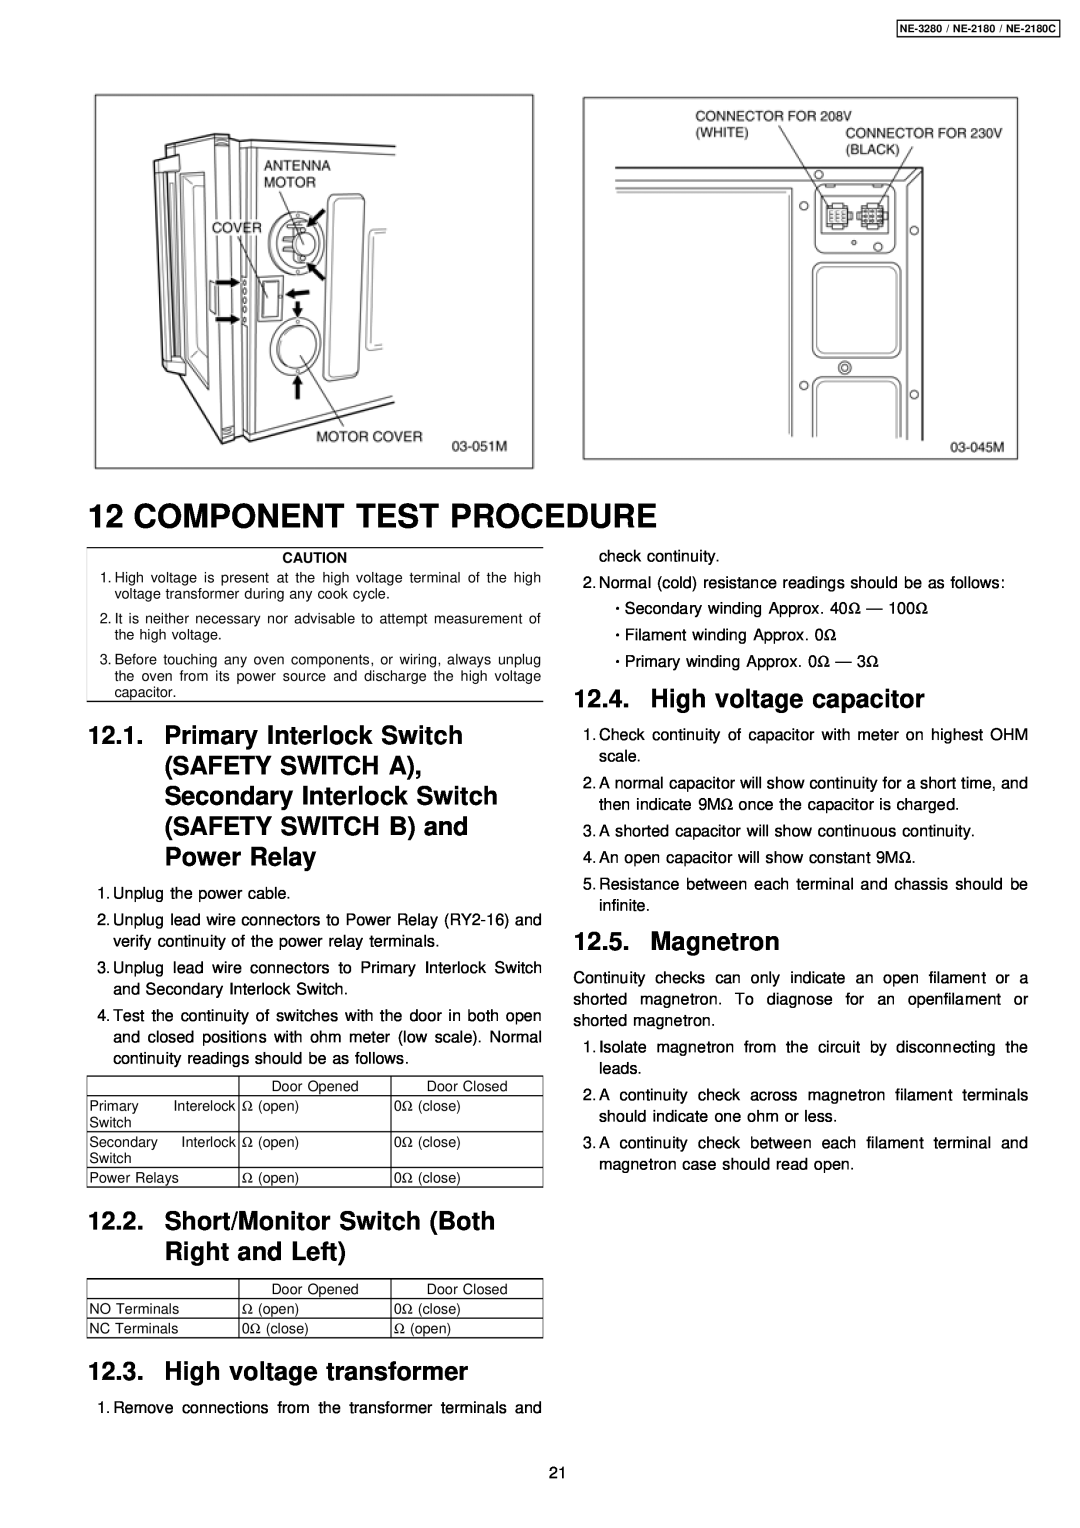 Panasonic NE-3280, NE-2180C manual Component Test Procedure, Primary Interlock Switch, High voltage capacitor, Magnetron 